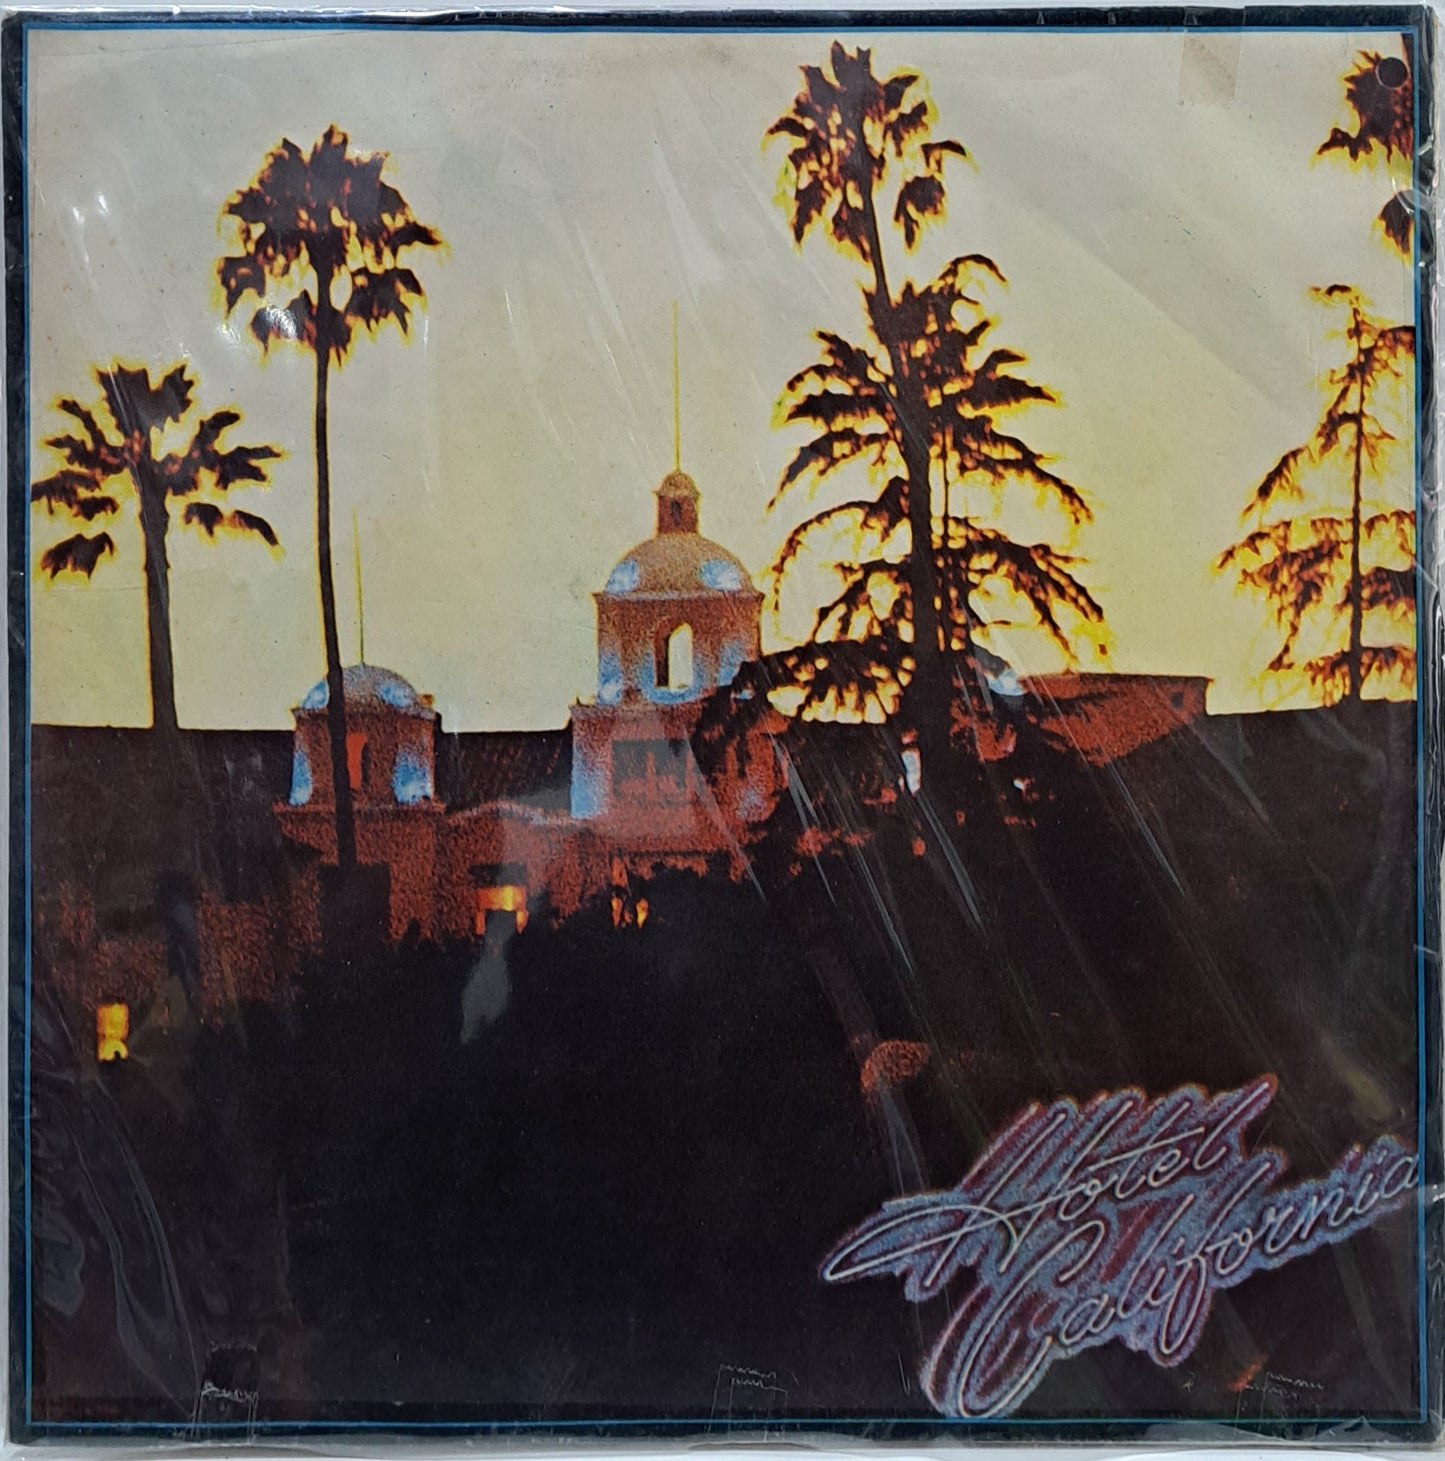 EAGLES - HOTEL CALIFORNIA LP